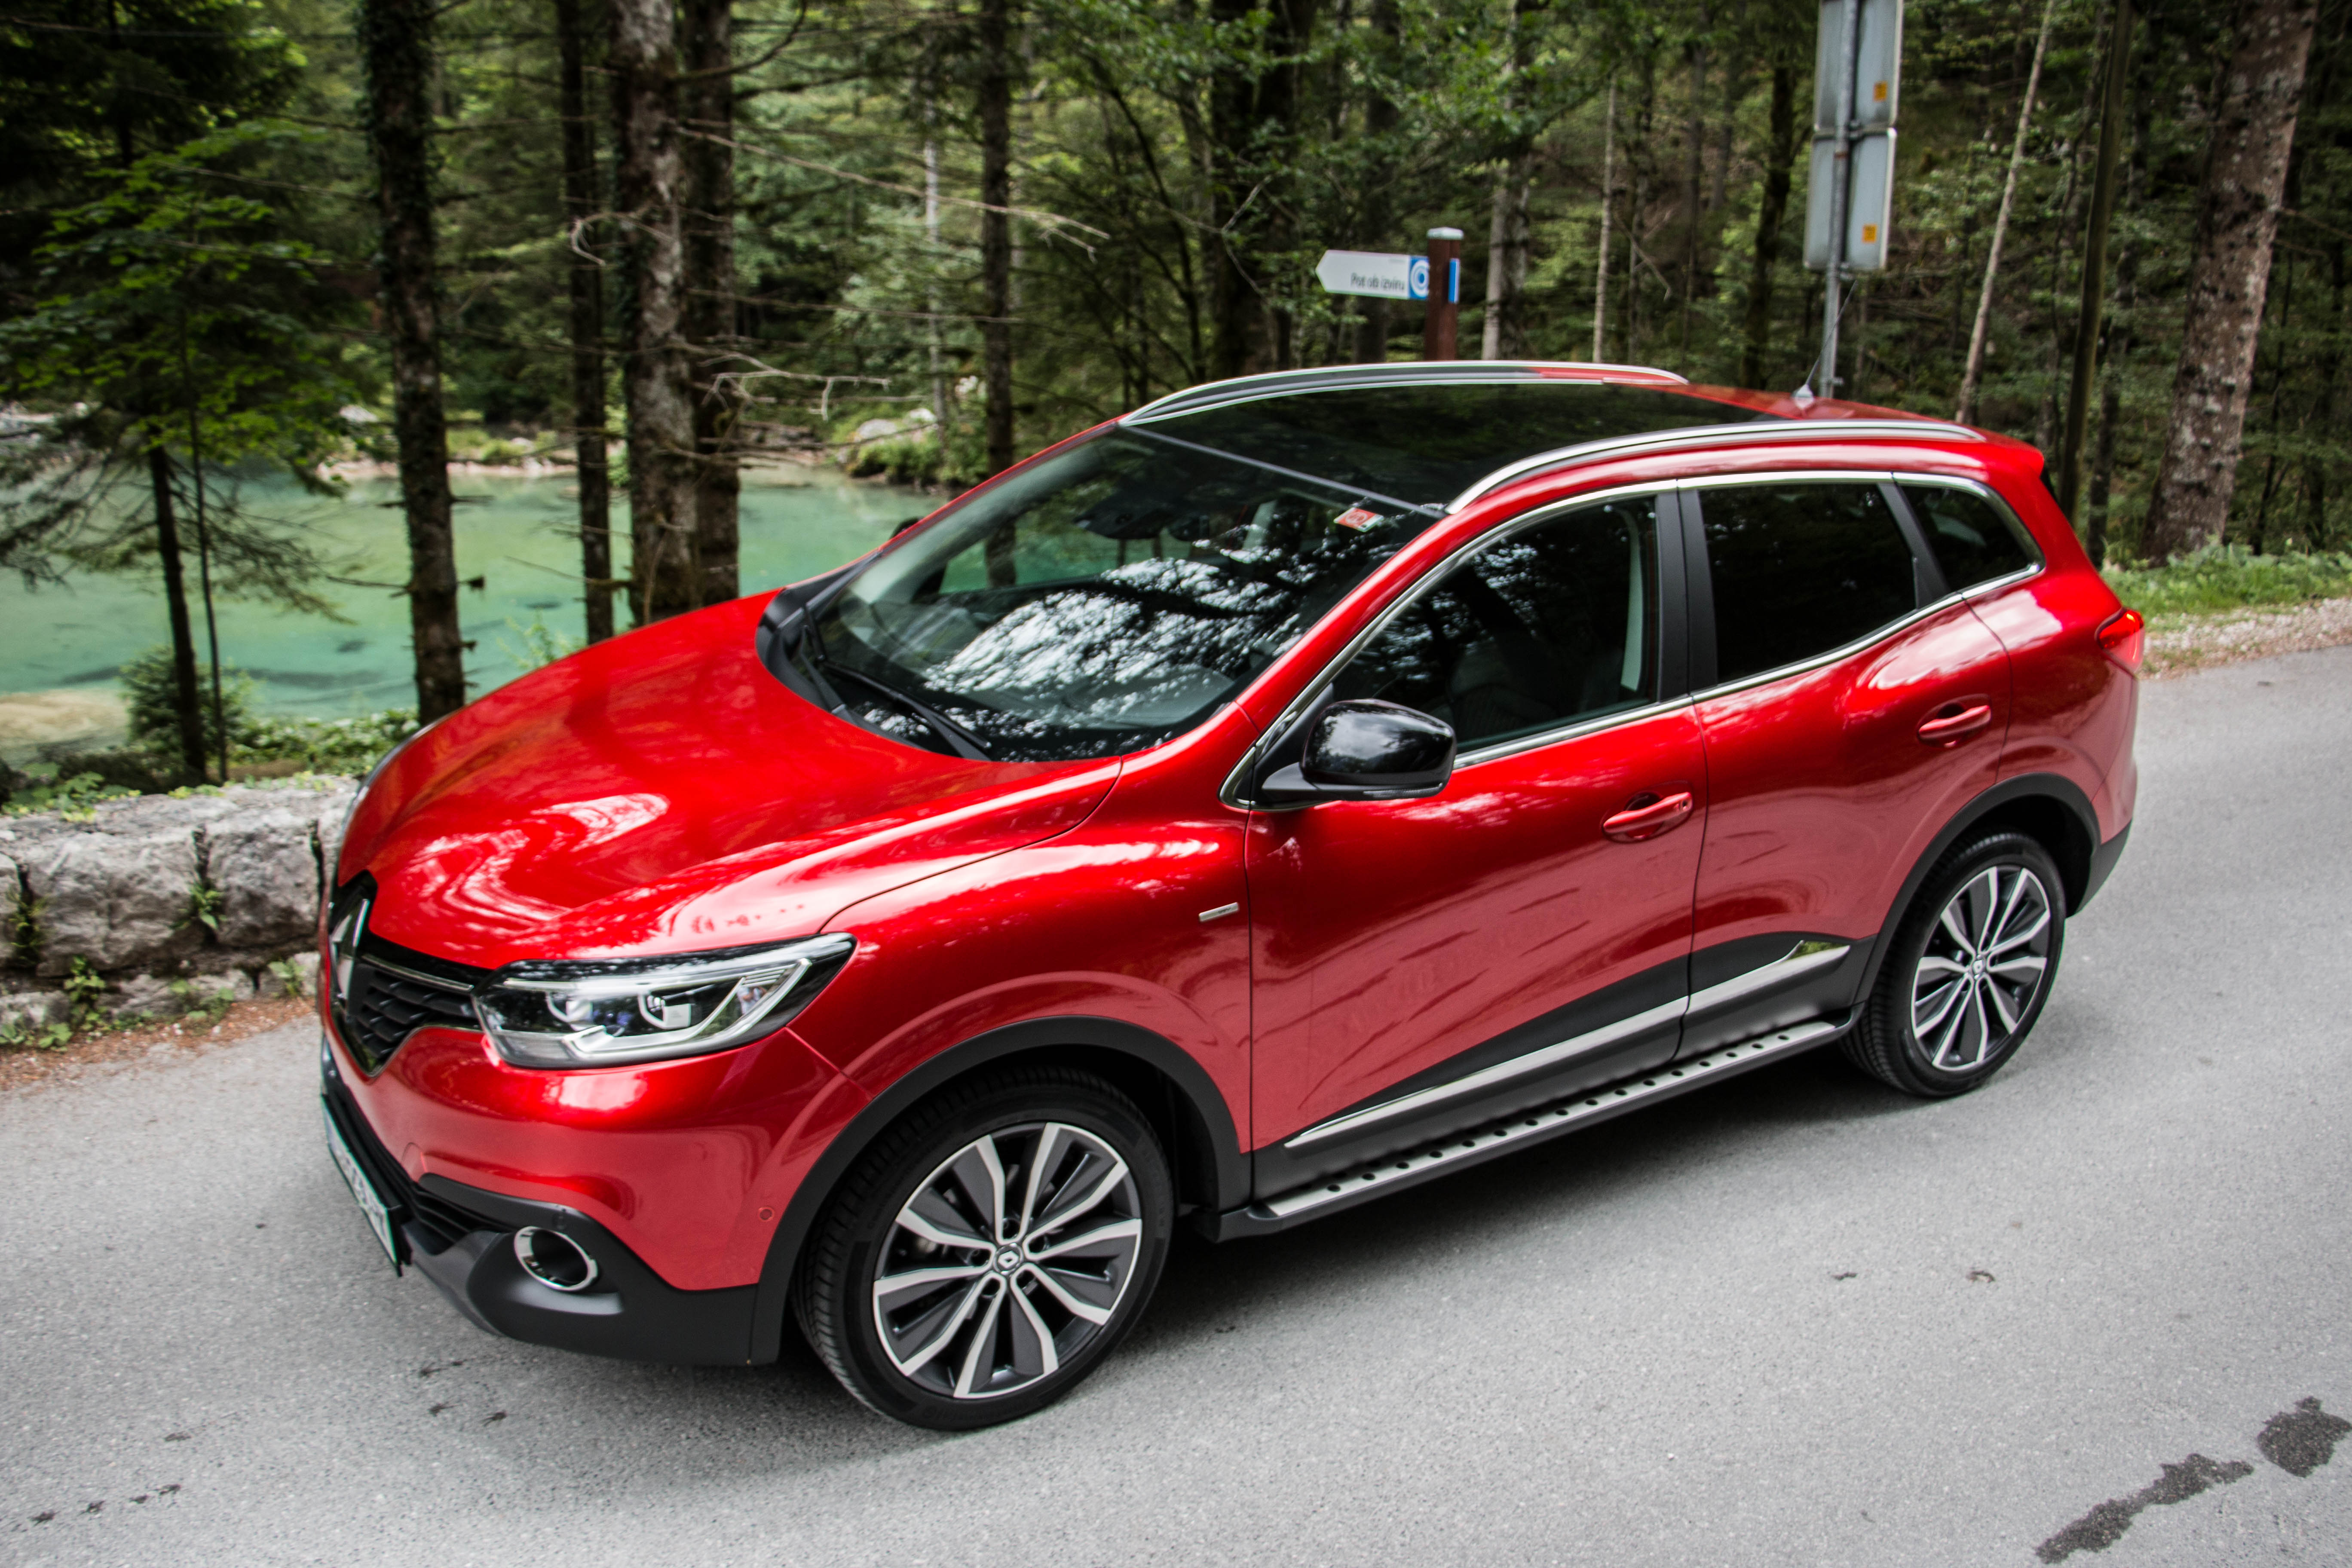 Renault Bose Edition needs New | for Magazine City all tastes and - Kadjar Test: